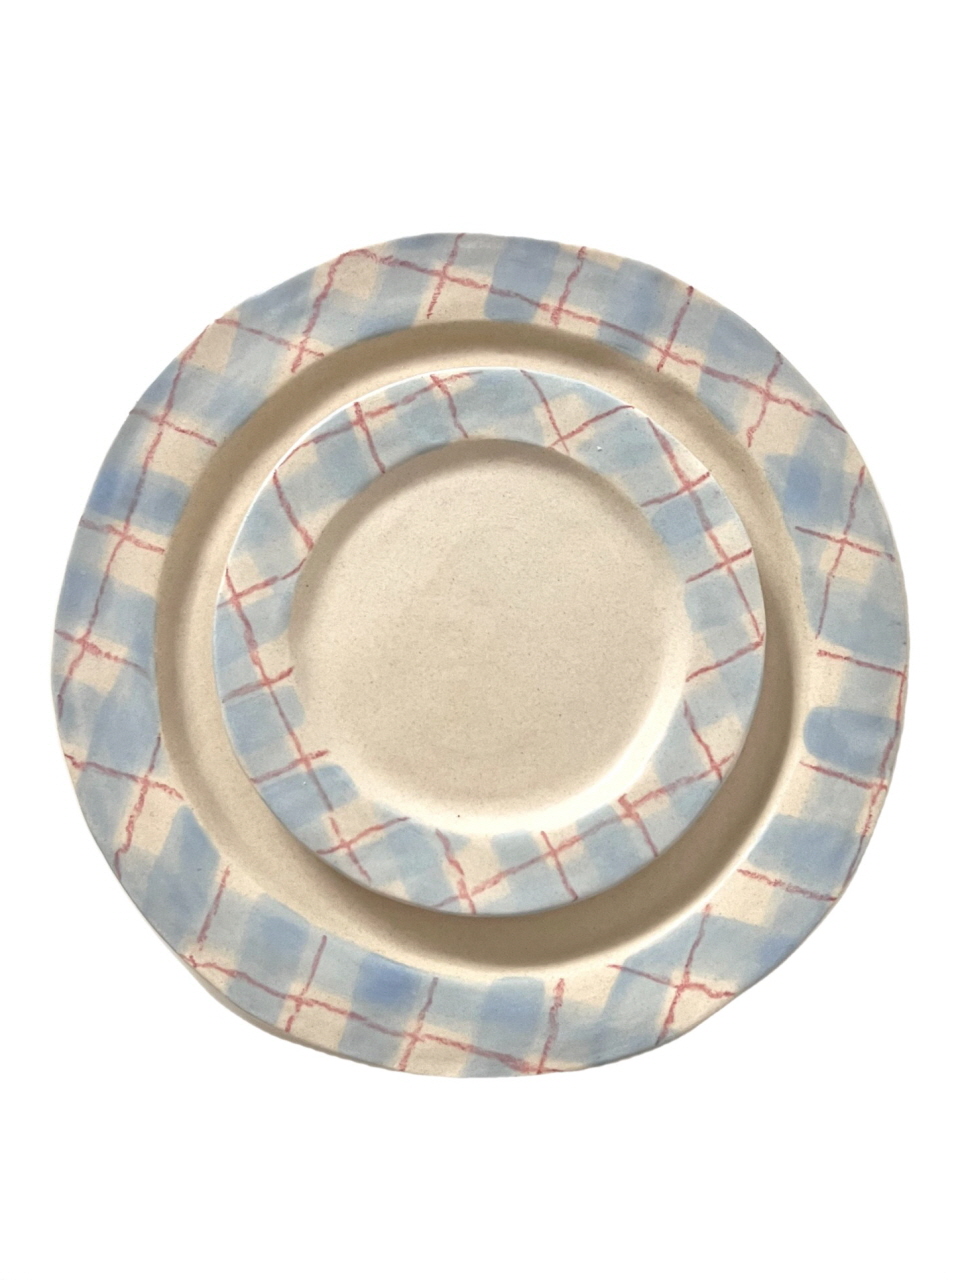 Picnic_salad plate